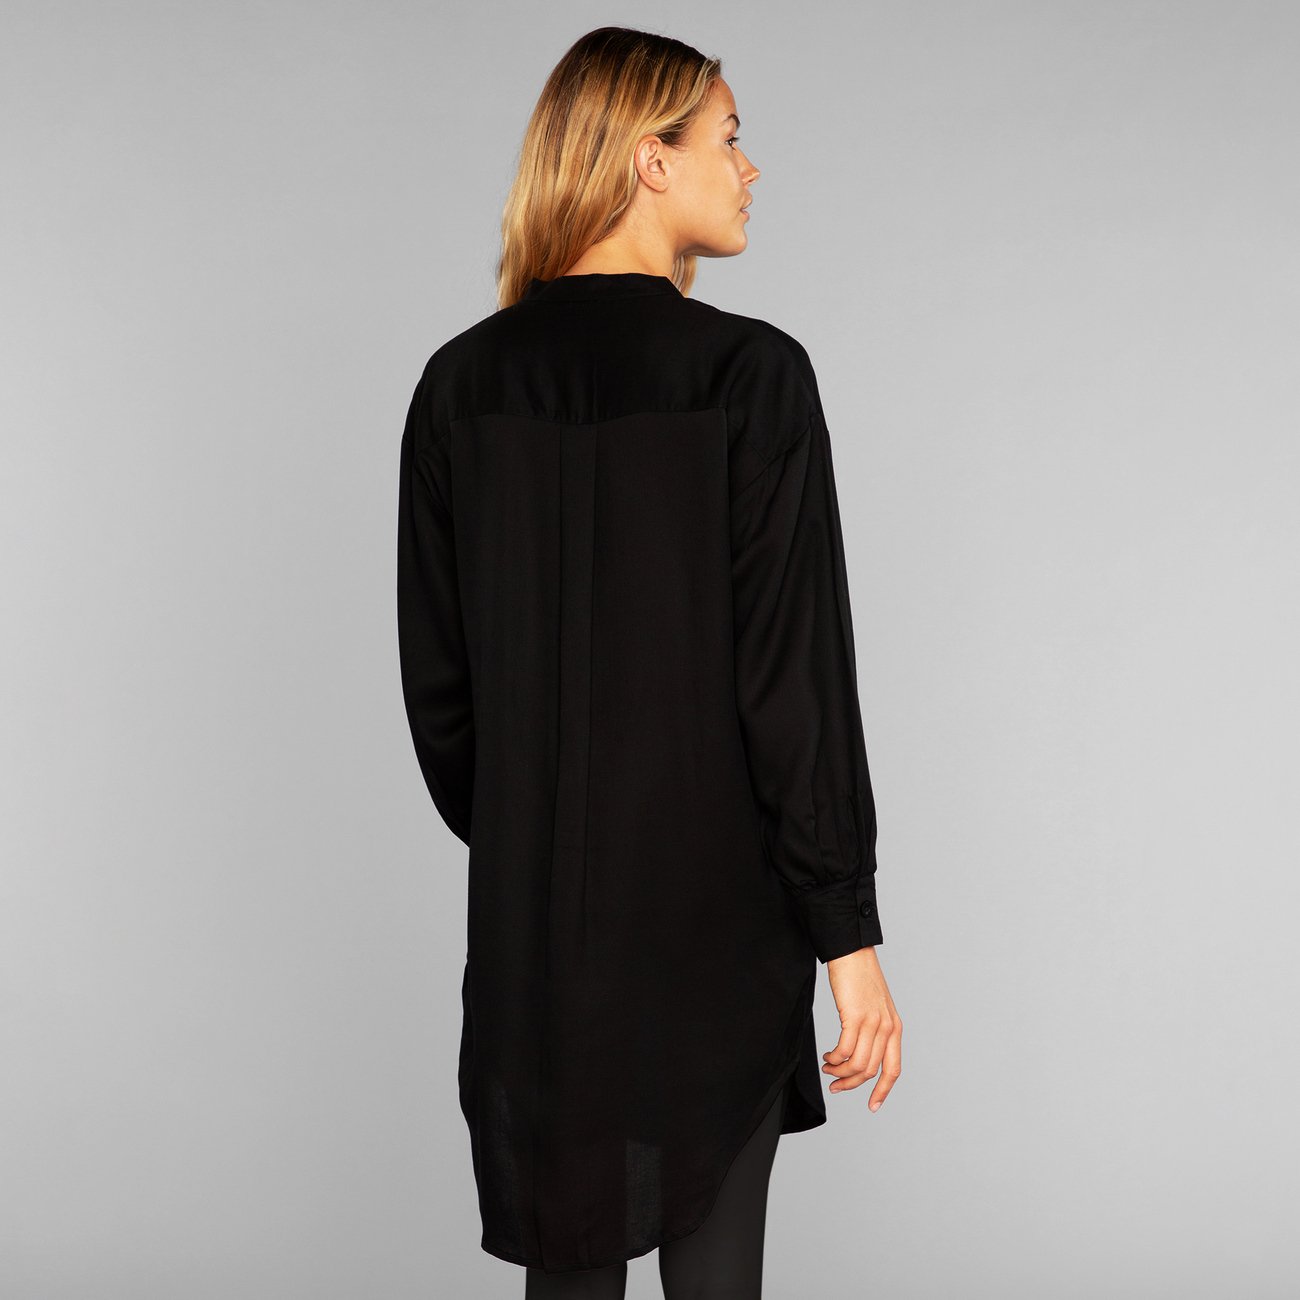 Shirt Ljunga black Black - LEEF mode en accessoires